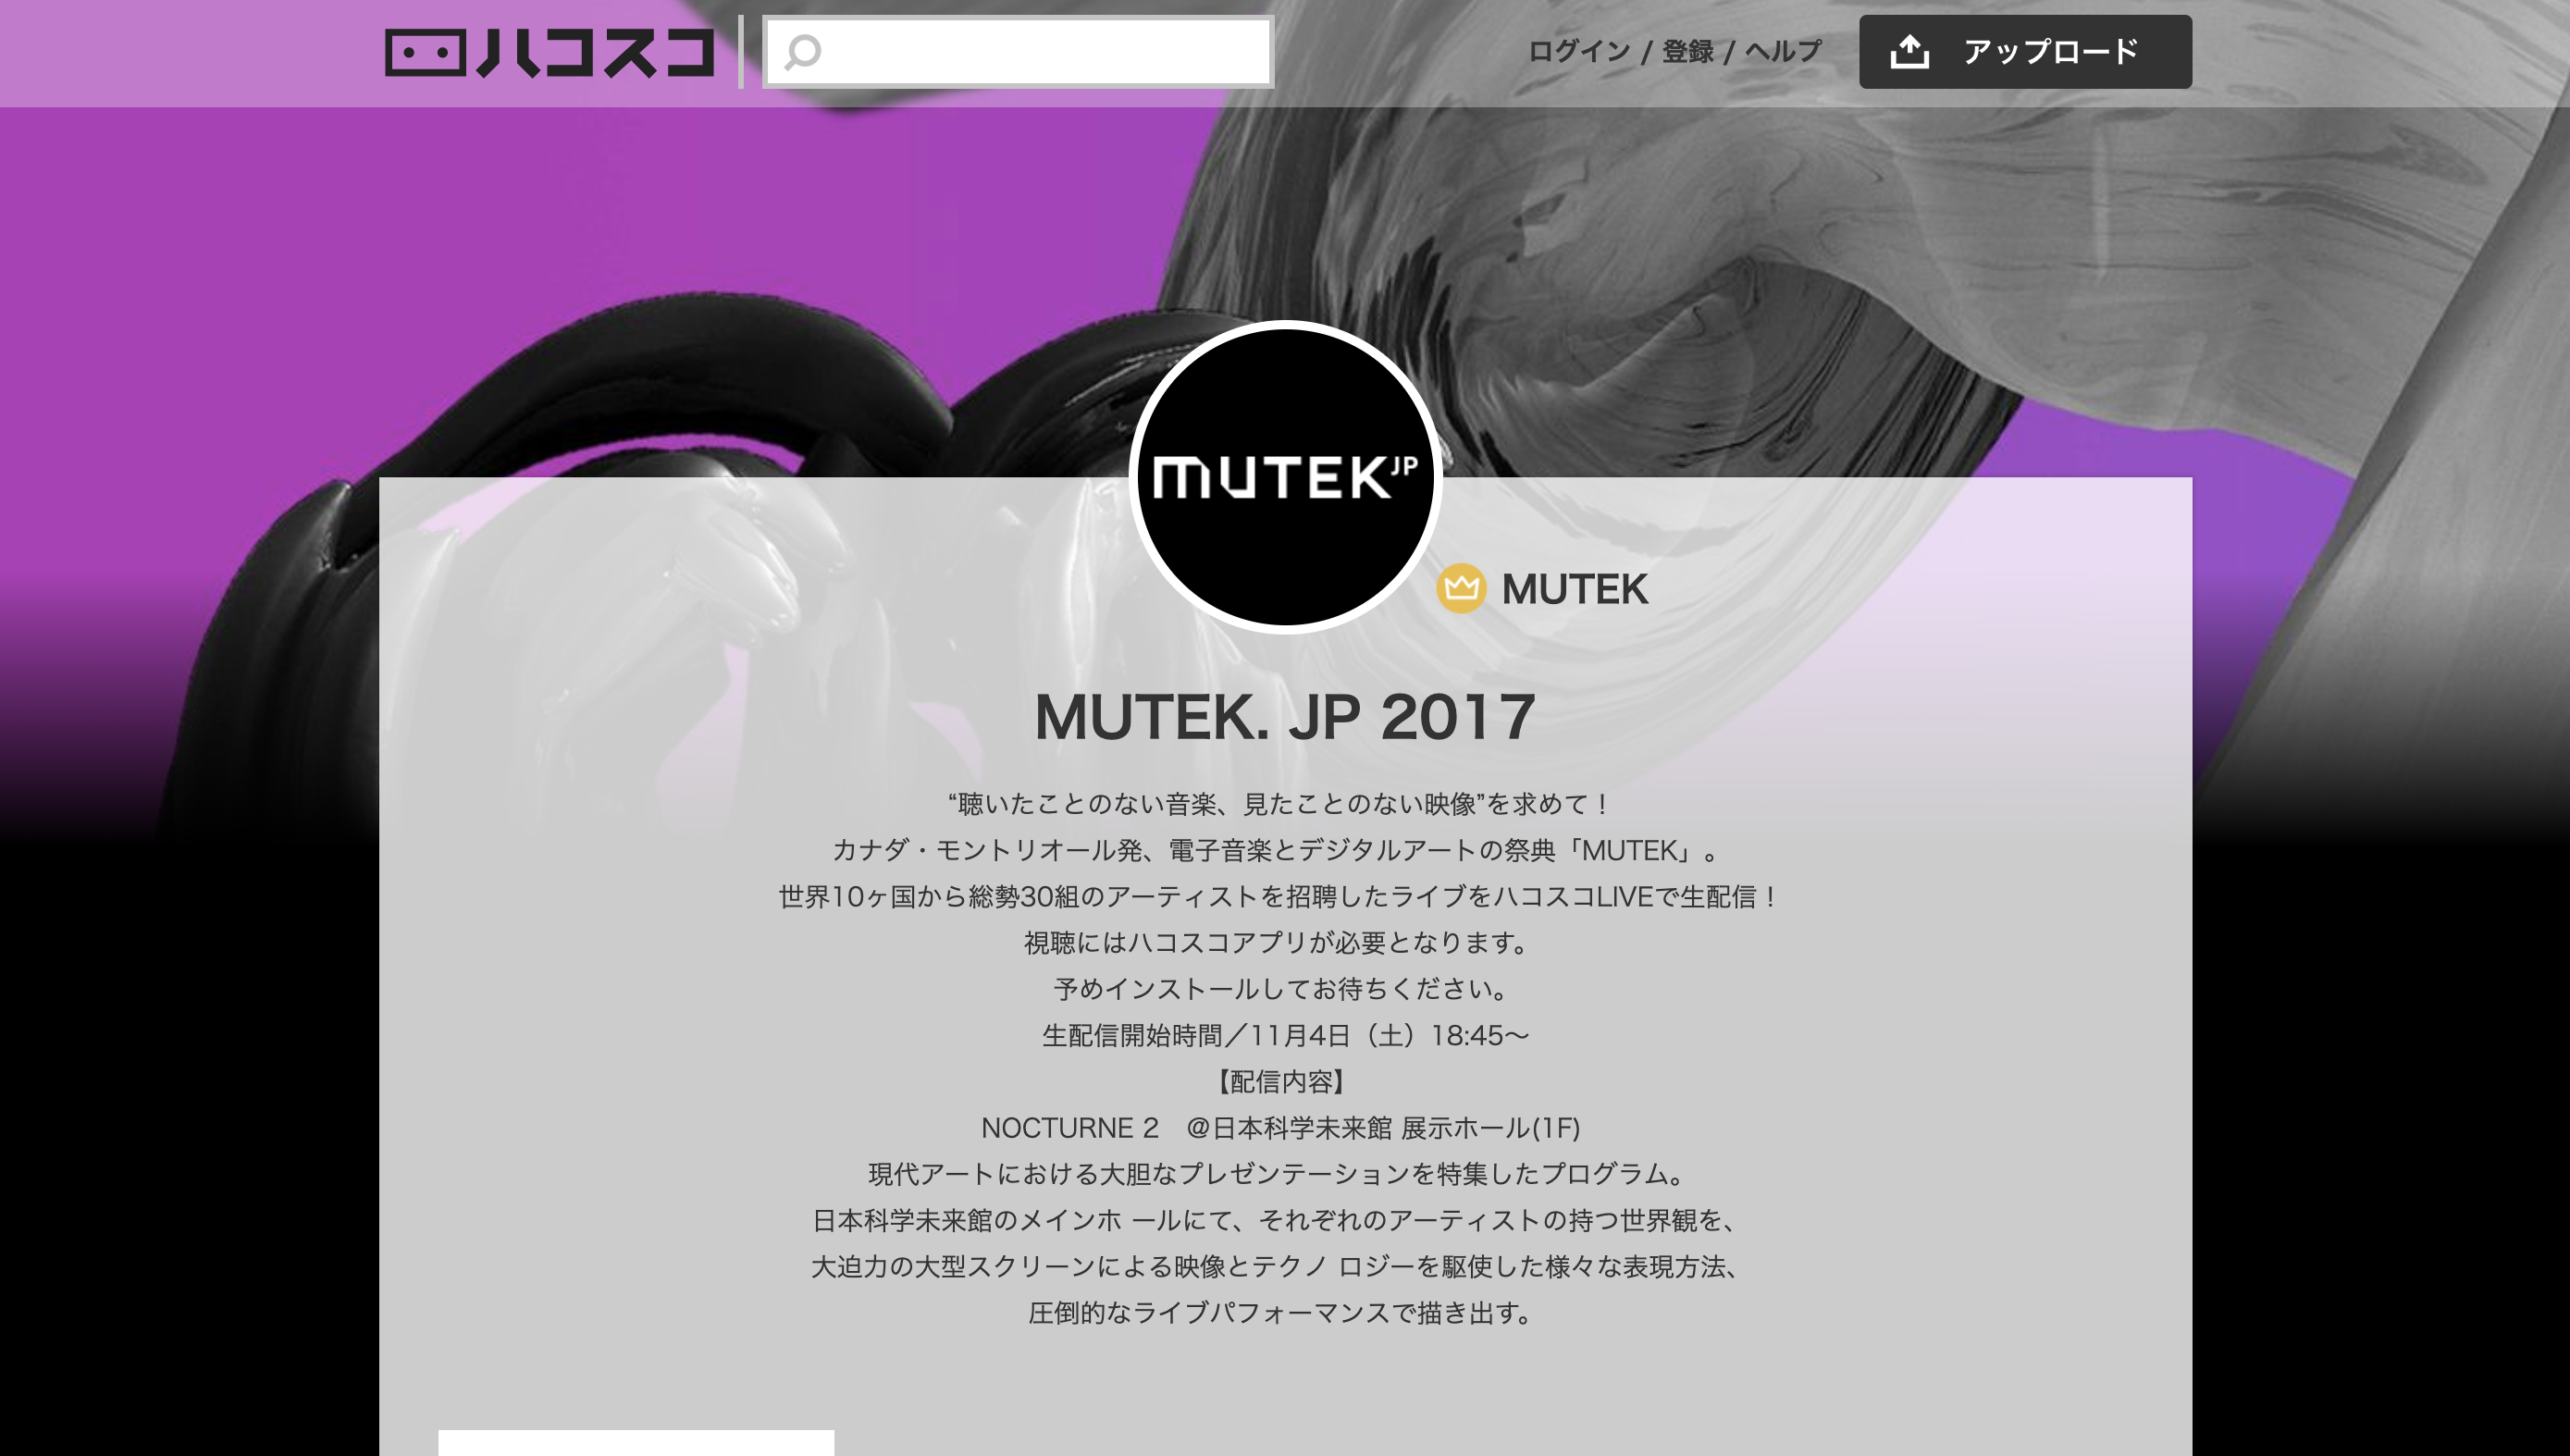 MUTEK.JP 2017、「ハコスコLIVE」による初のVRライブ配信をお届け！